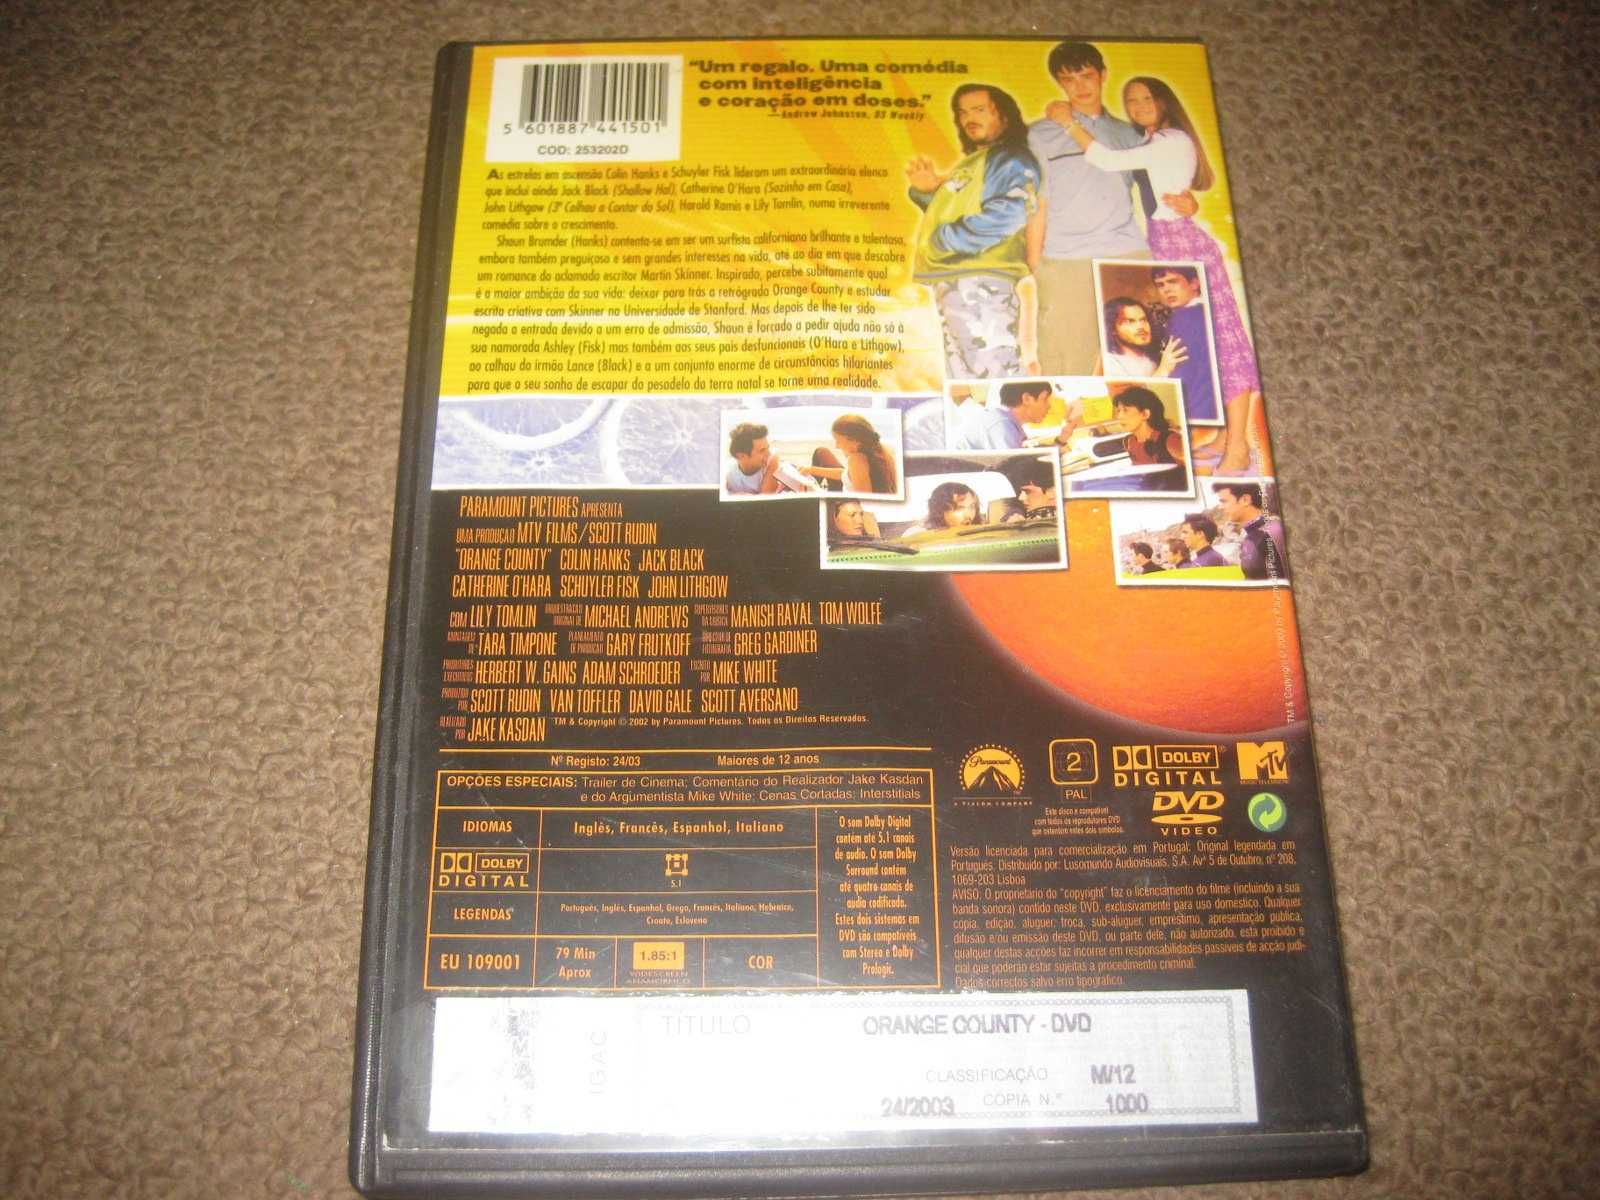 DVD "Orange County" com Jack Black